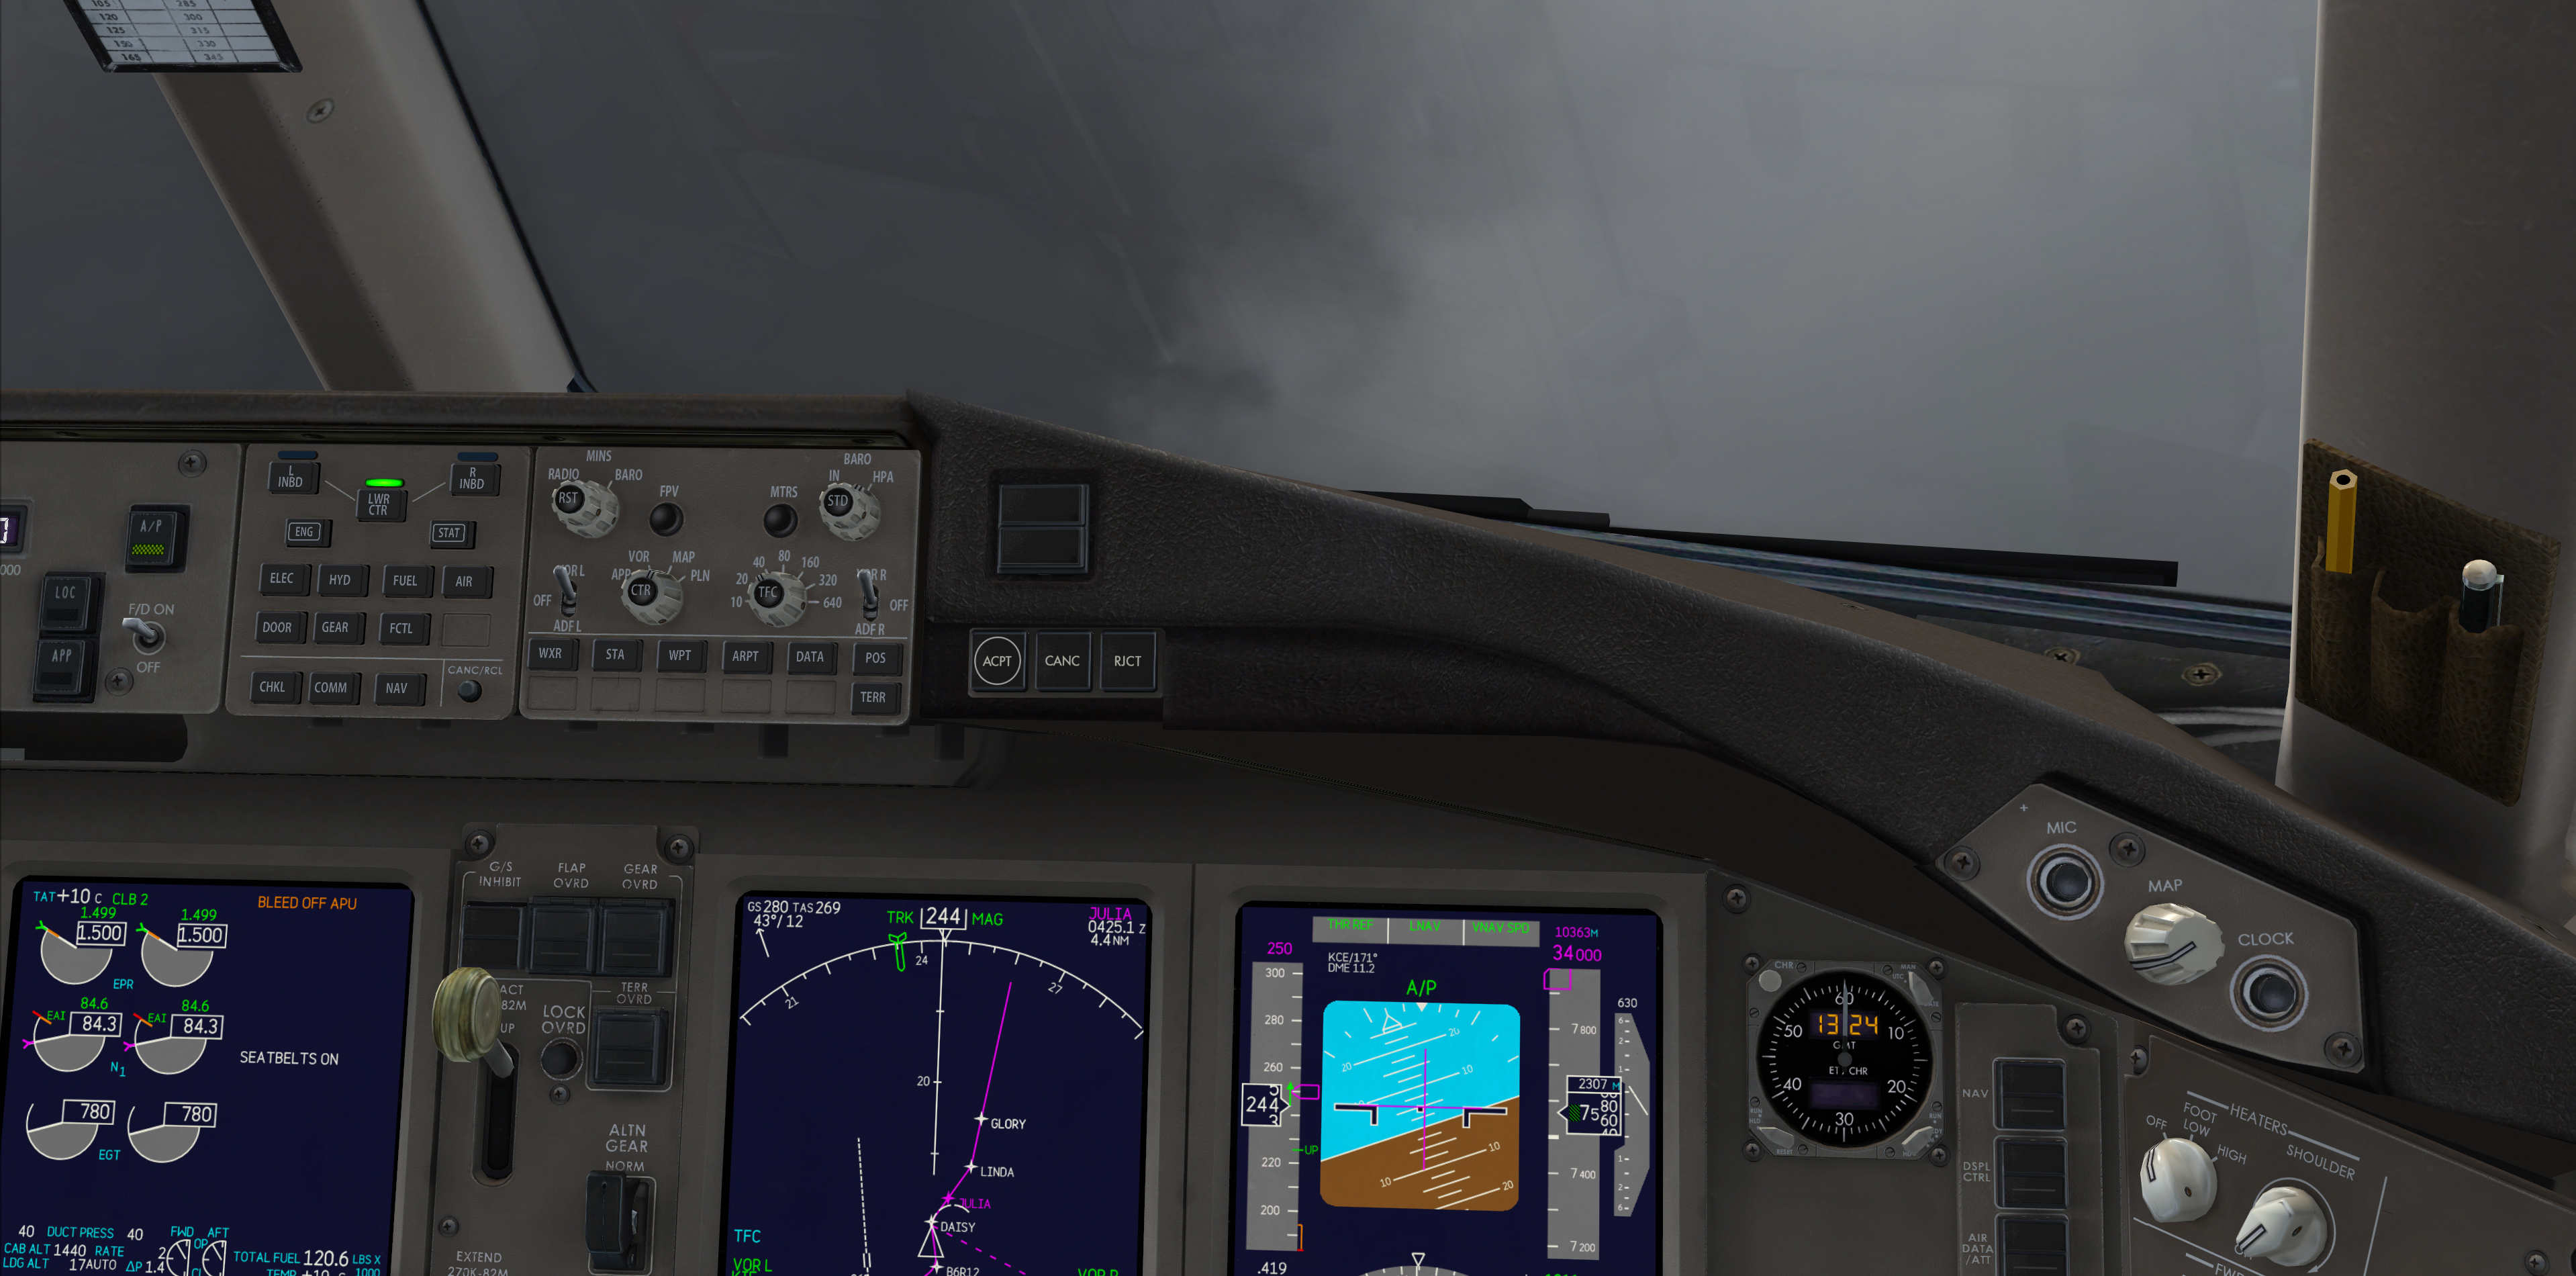 Cathay rainy departure osaka flightdeck view.jpg